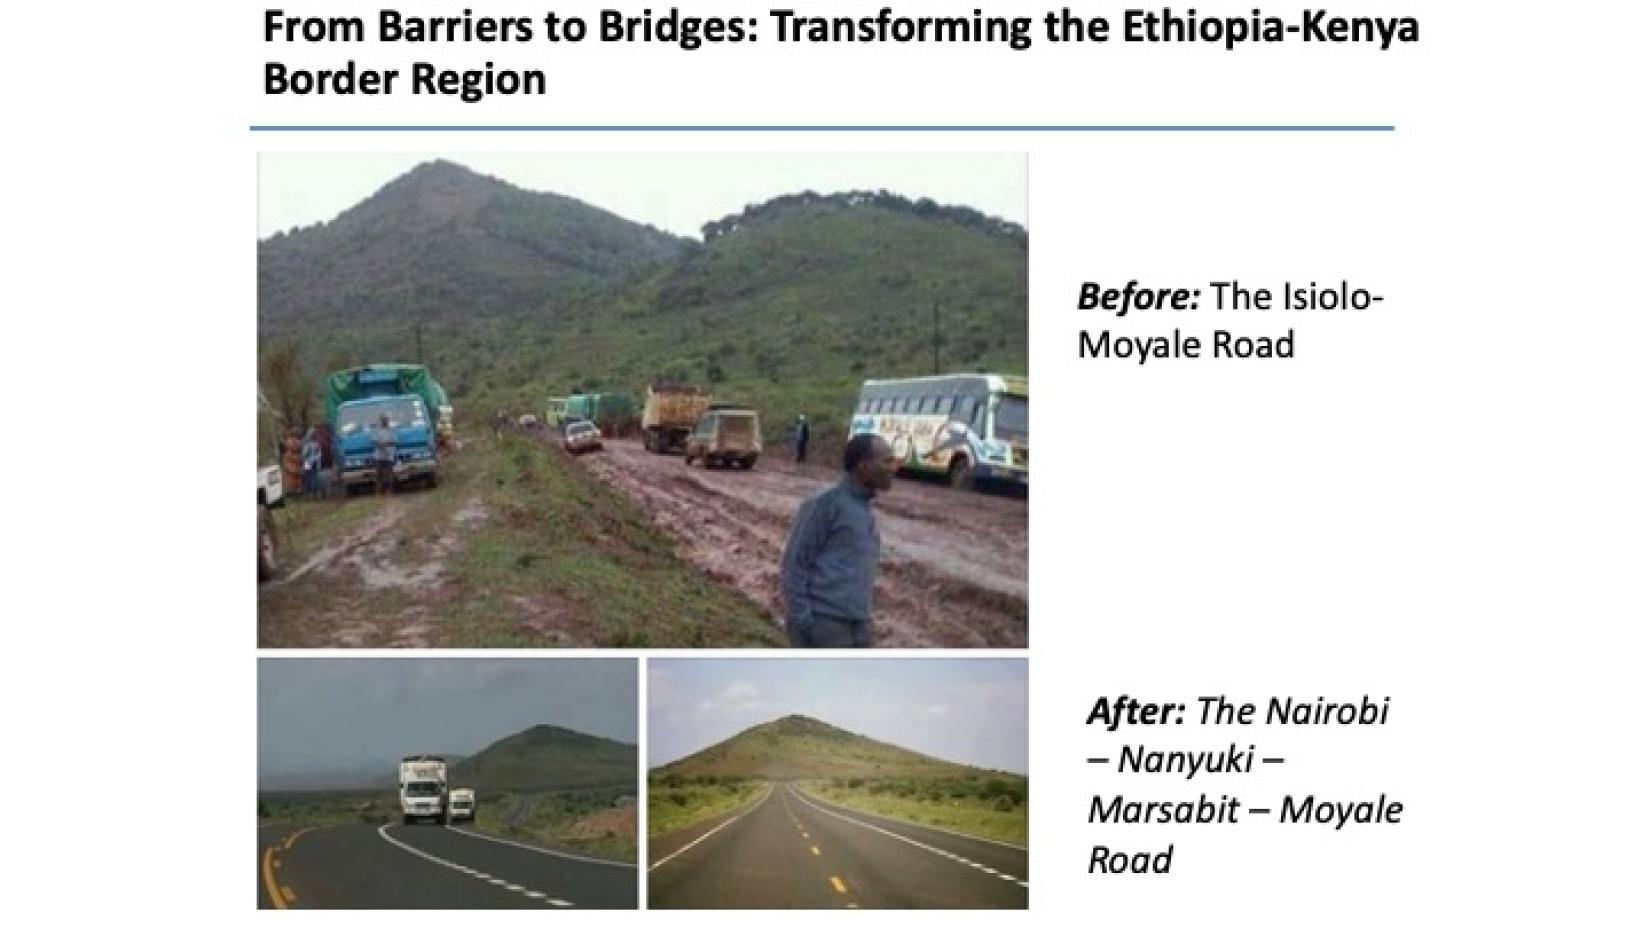 From Barriers to Bridges: Transforming the Ethiopia-Kenya Border Region